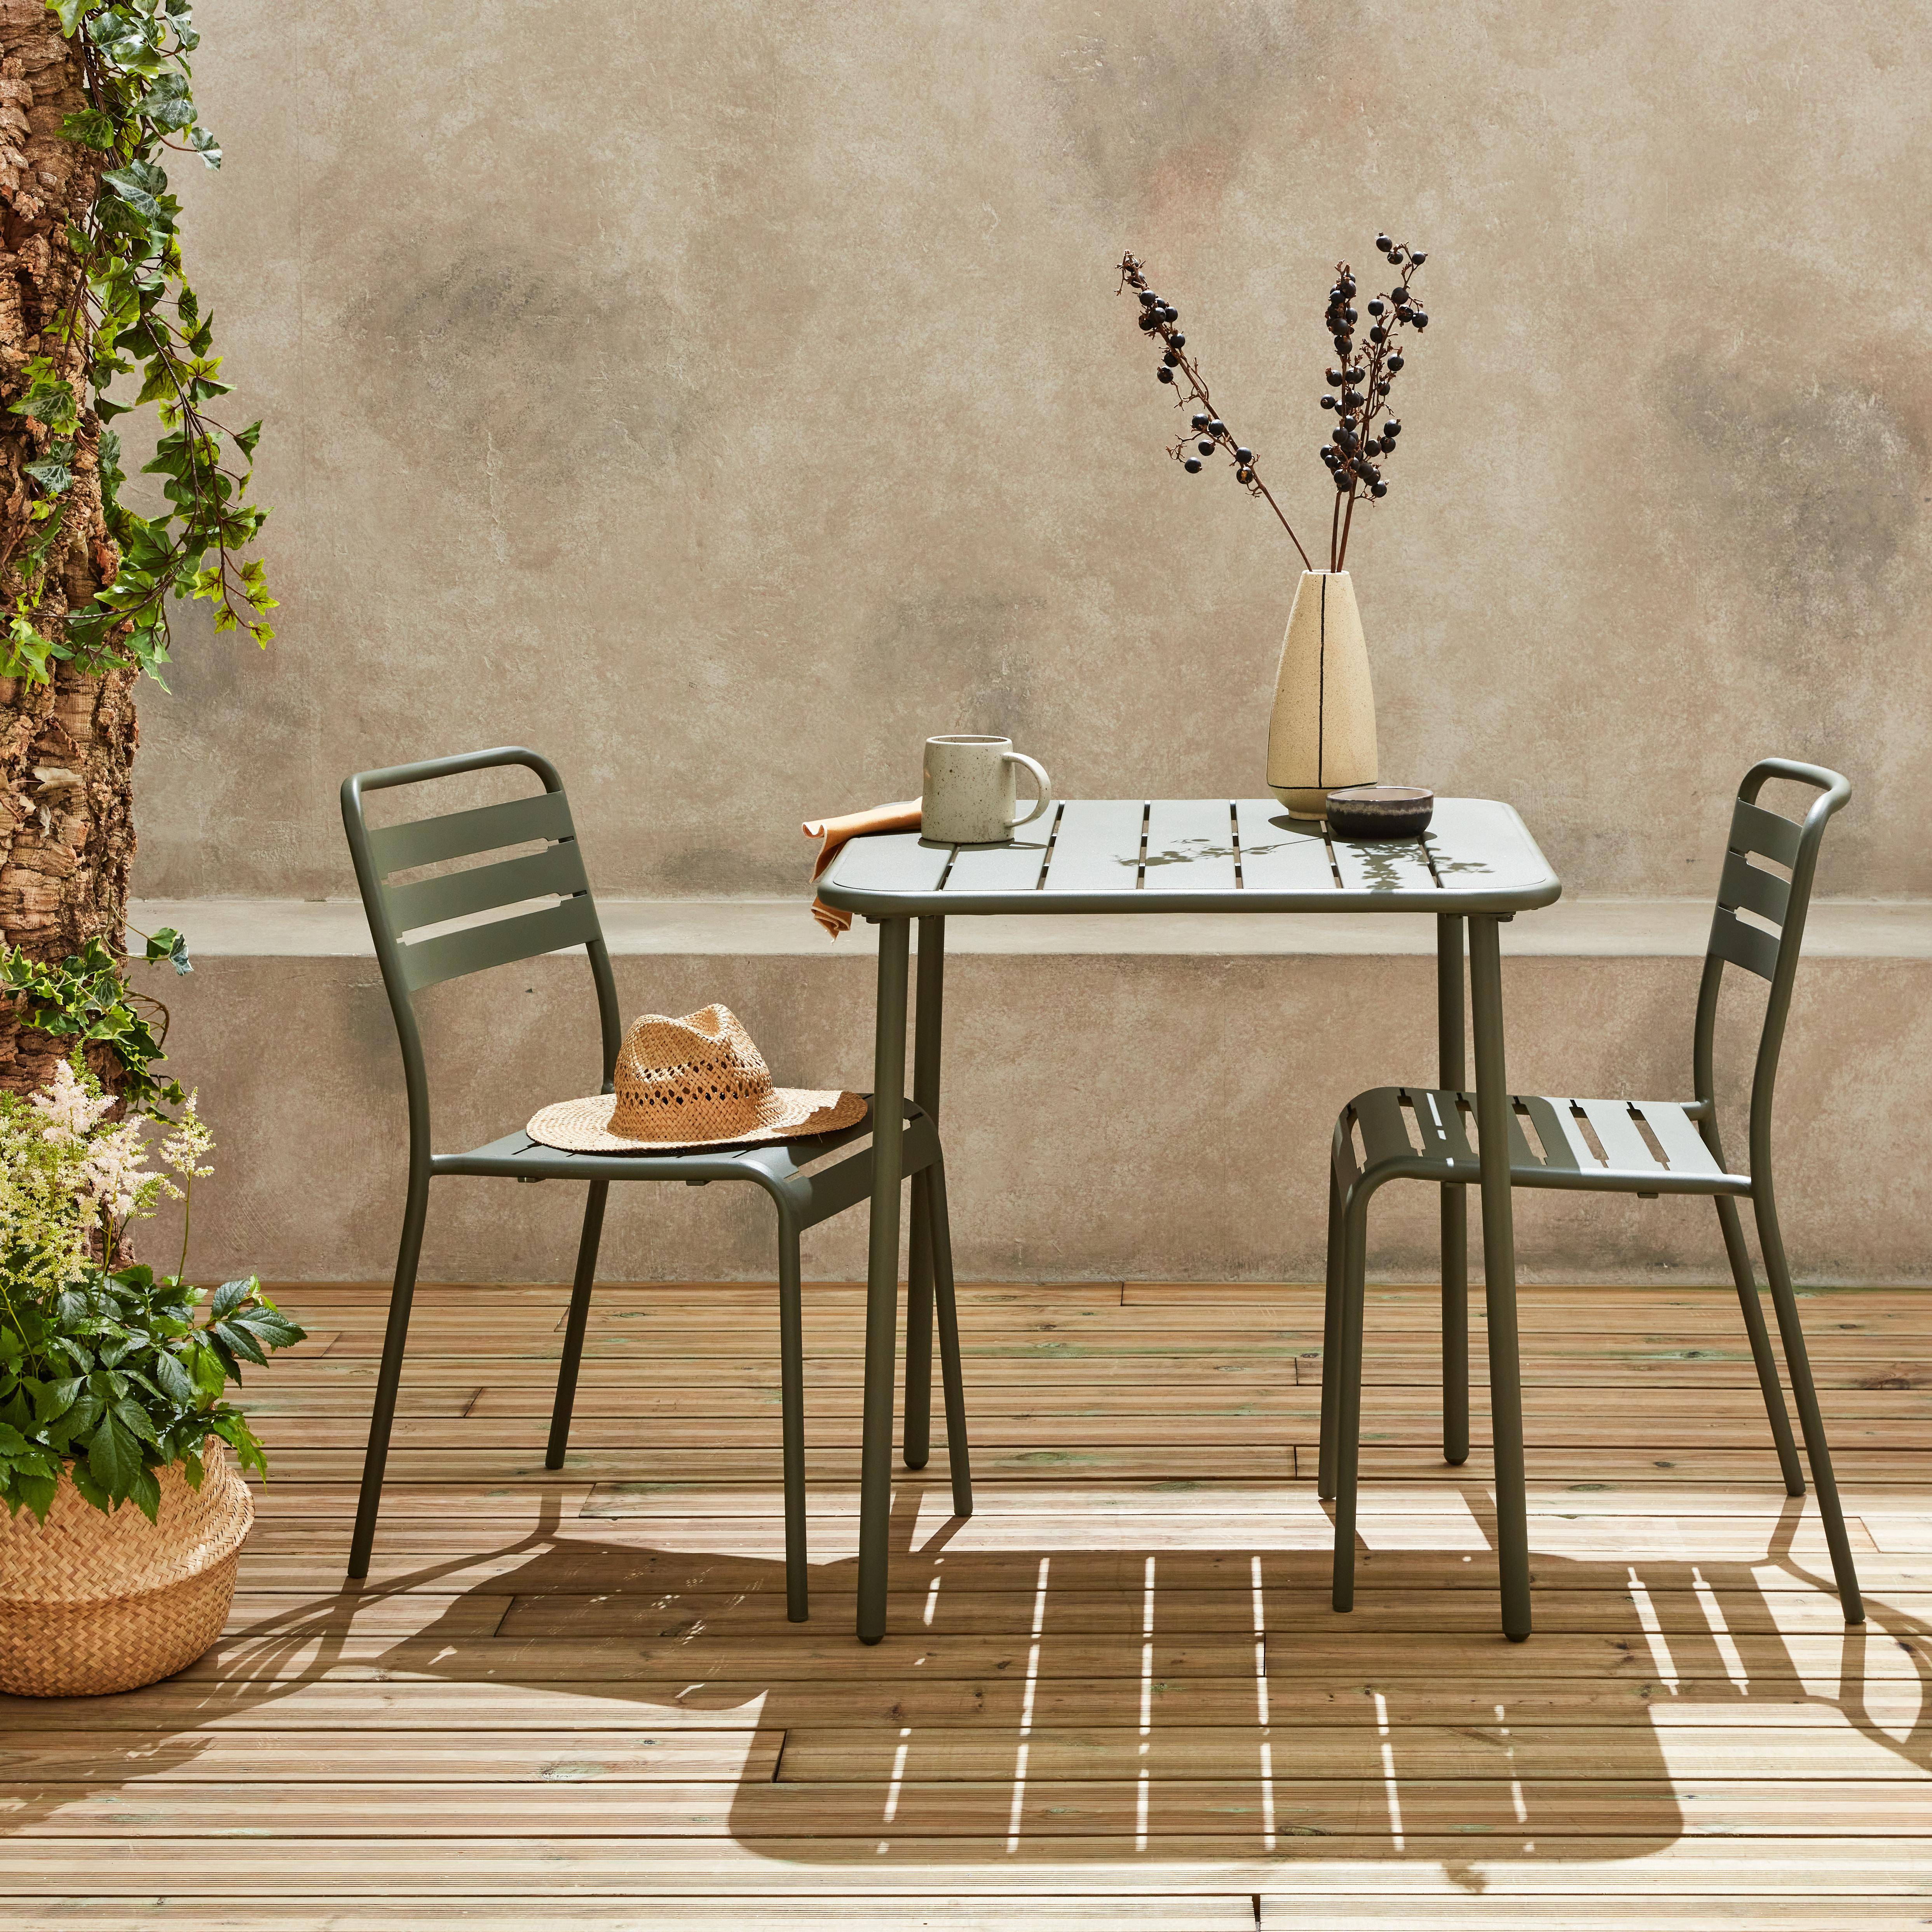 Amélia savane metalen tuintafel met 2 stoelen, latten en afgeronde hoeken, roestbestendige afwerking,sweeek,Photo1